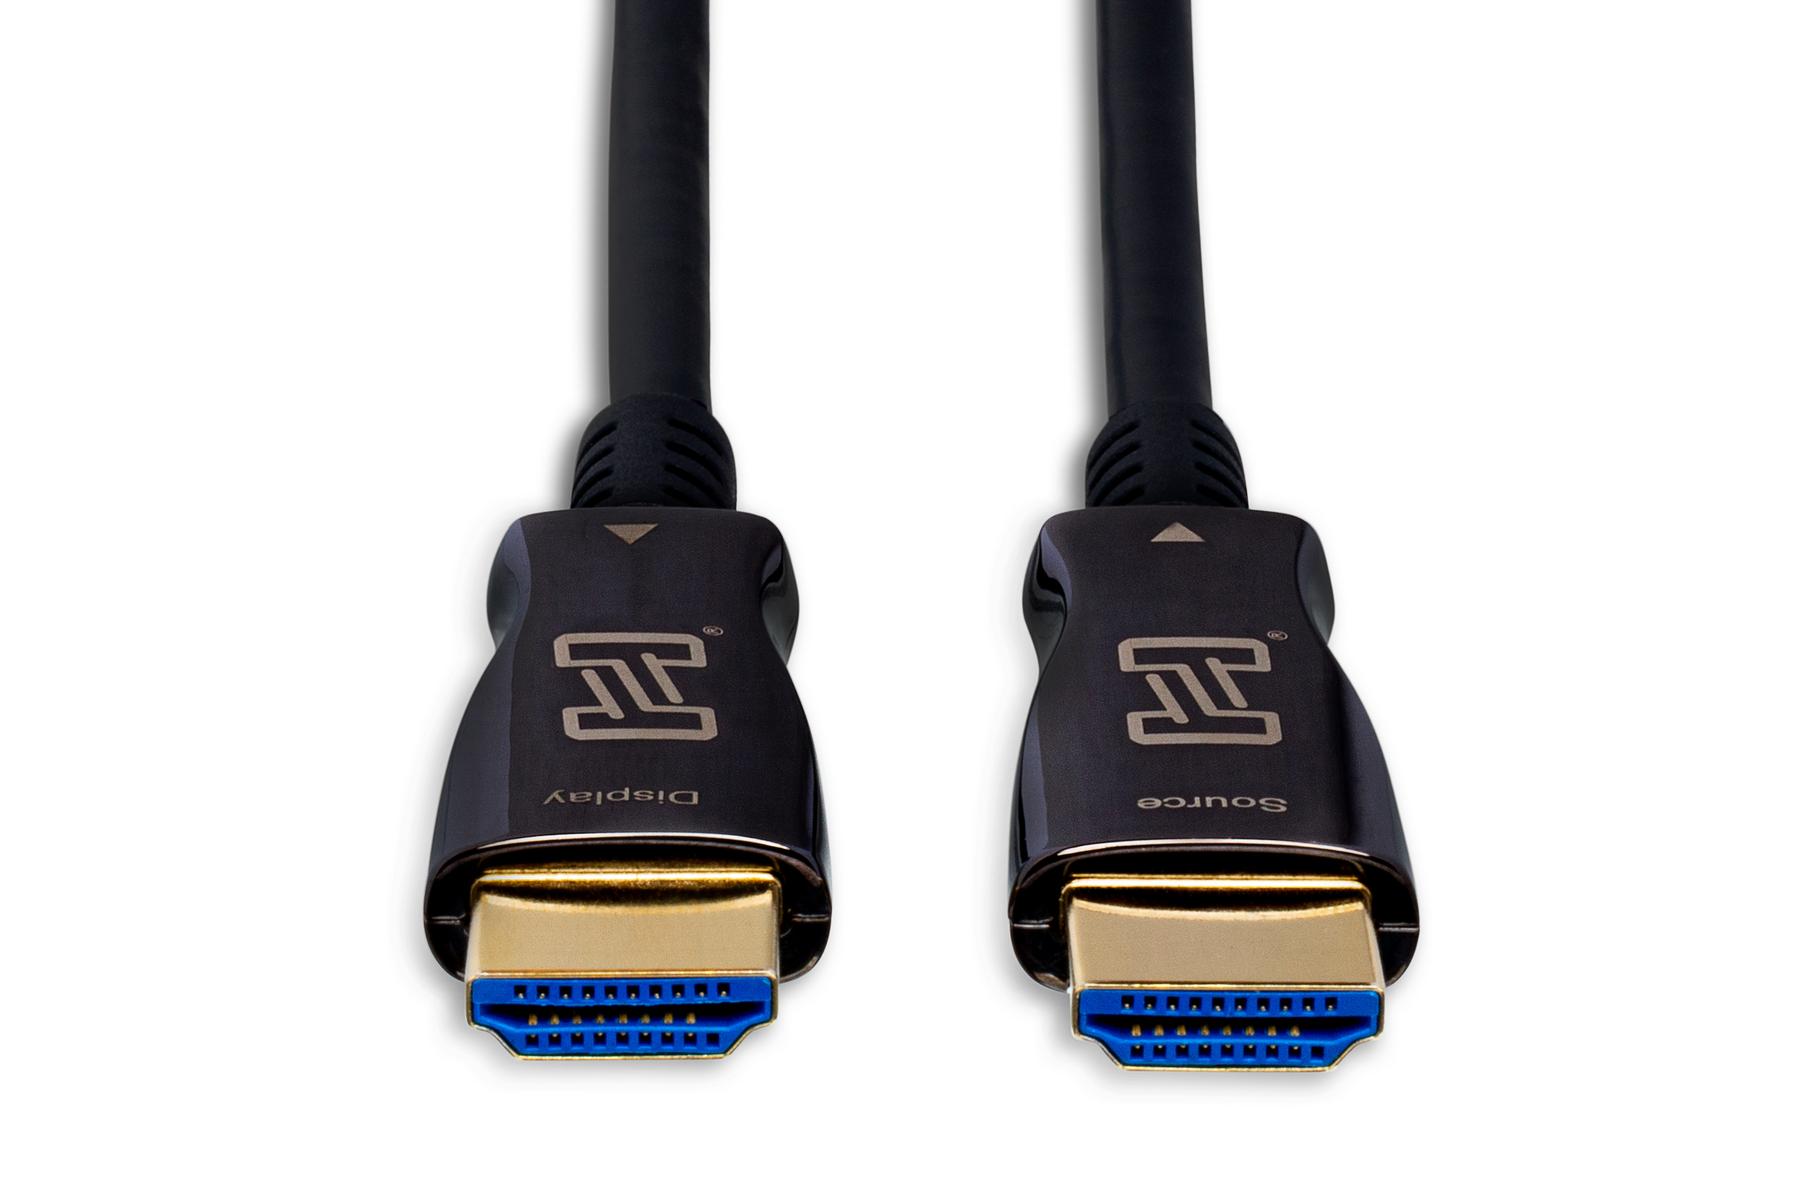 Active Optical HDMI Cable, 4K HDR 4:4:4/60, ARC, CEC, ALLM & VRR